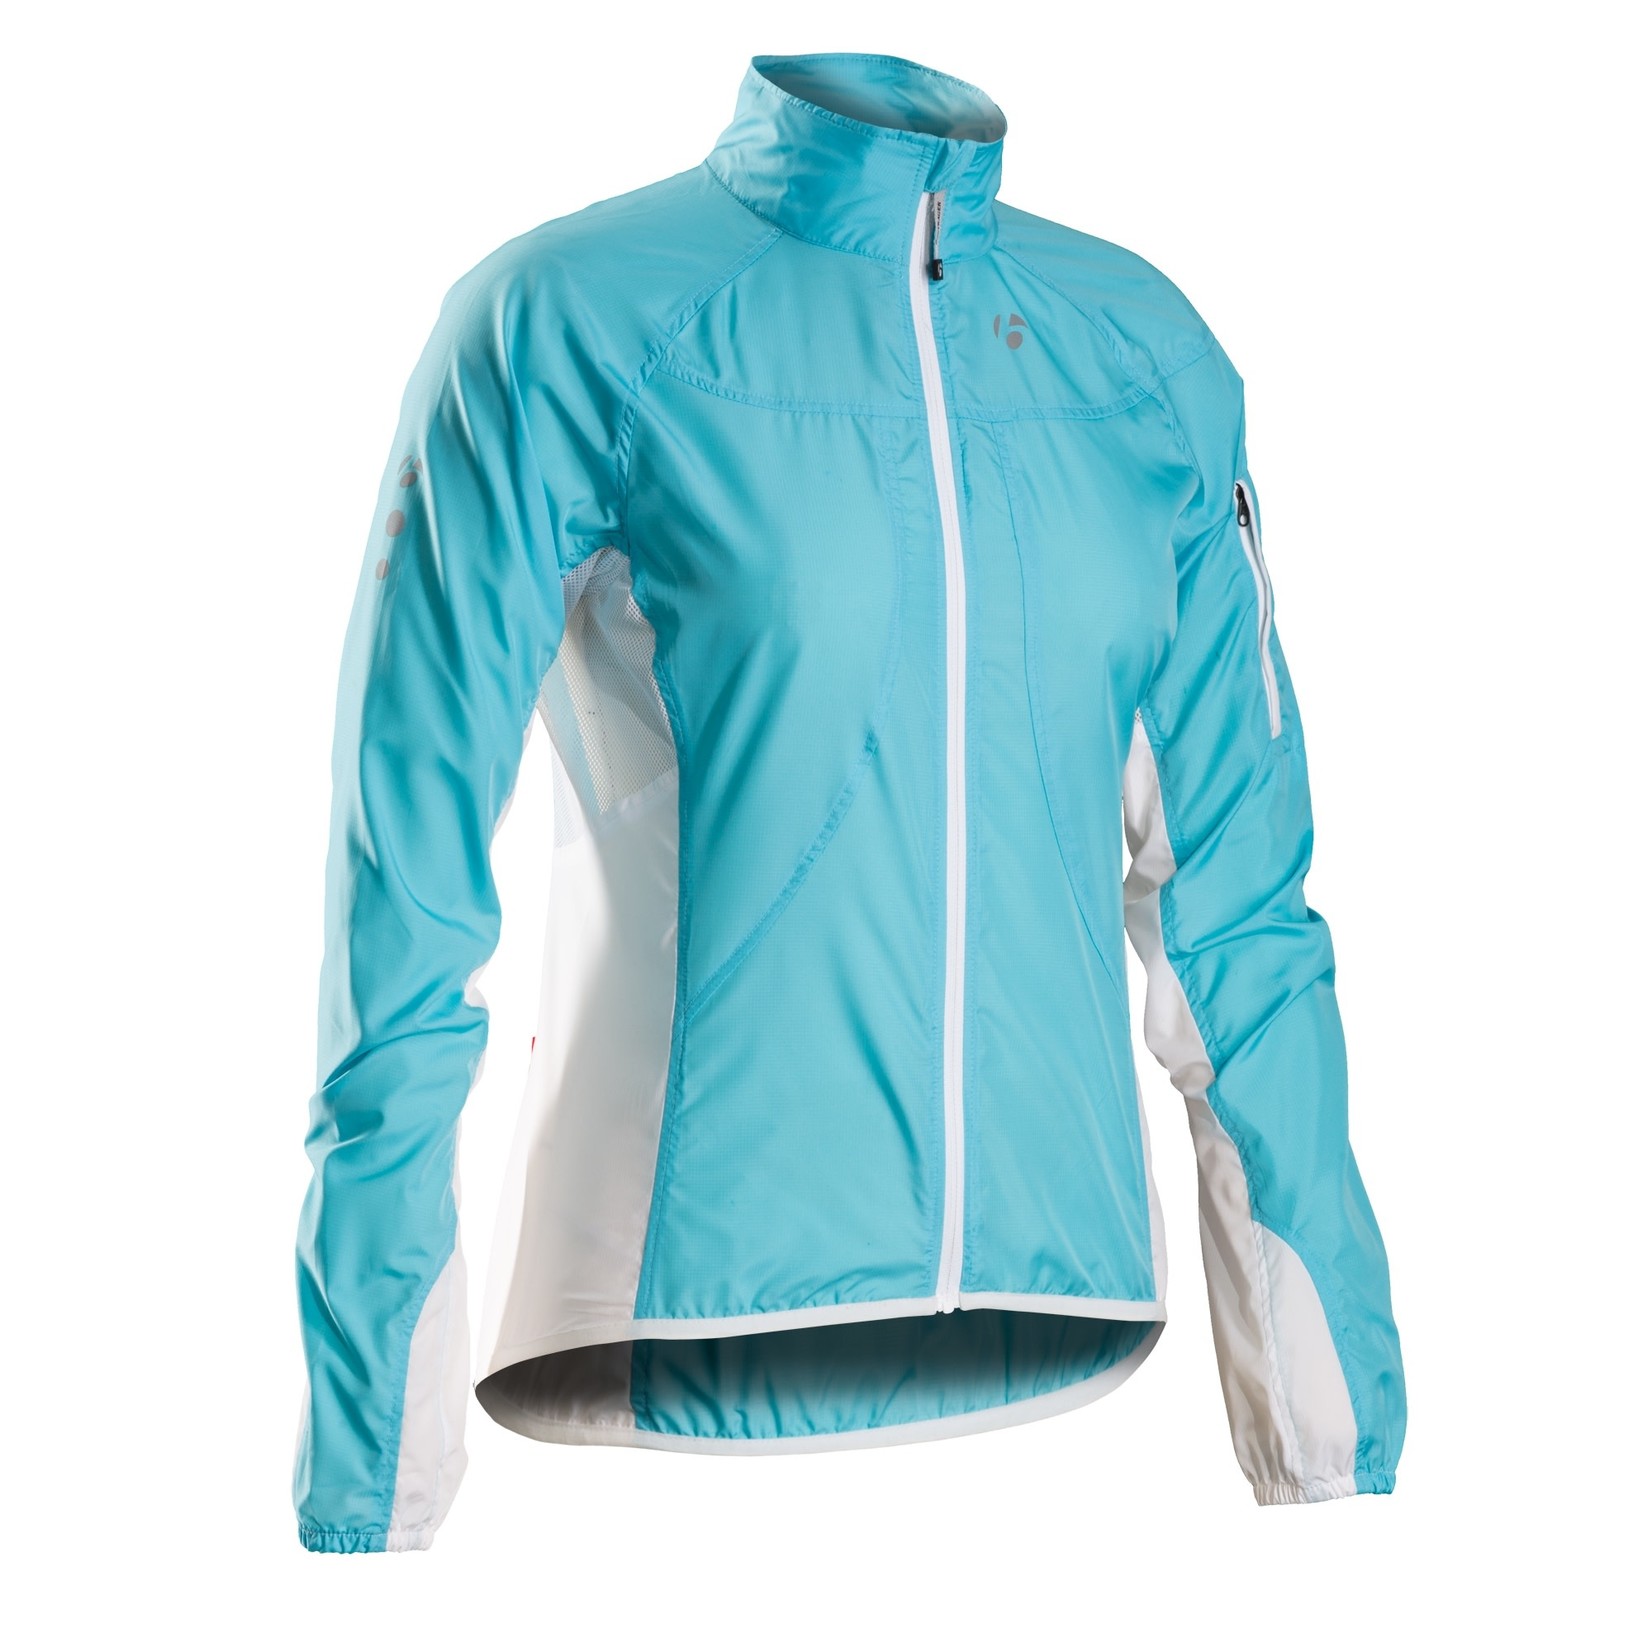 BONTRAGER Bontrager Women's Race Convertible Windshell Jacket Vestes X-Small Blue